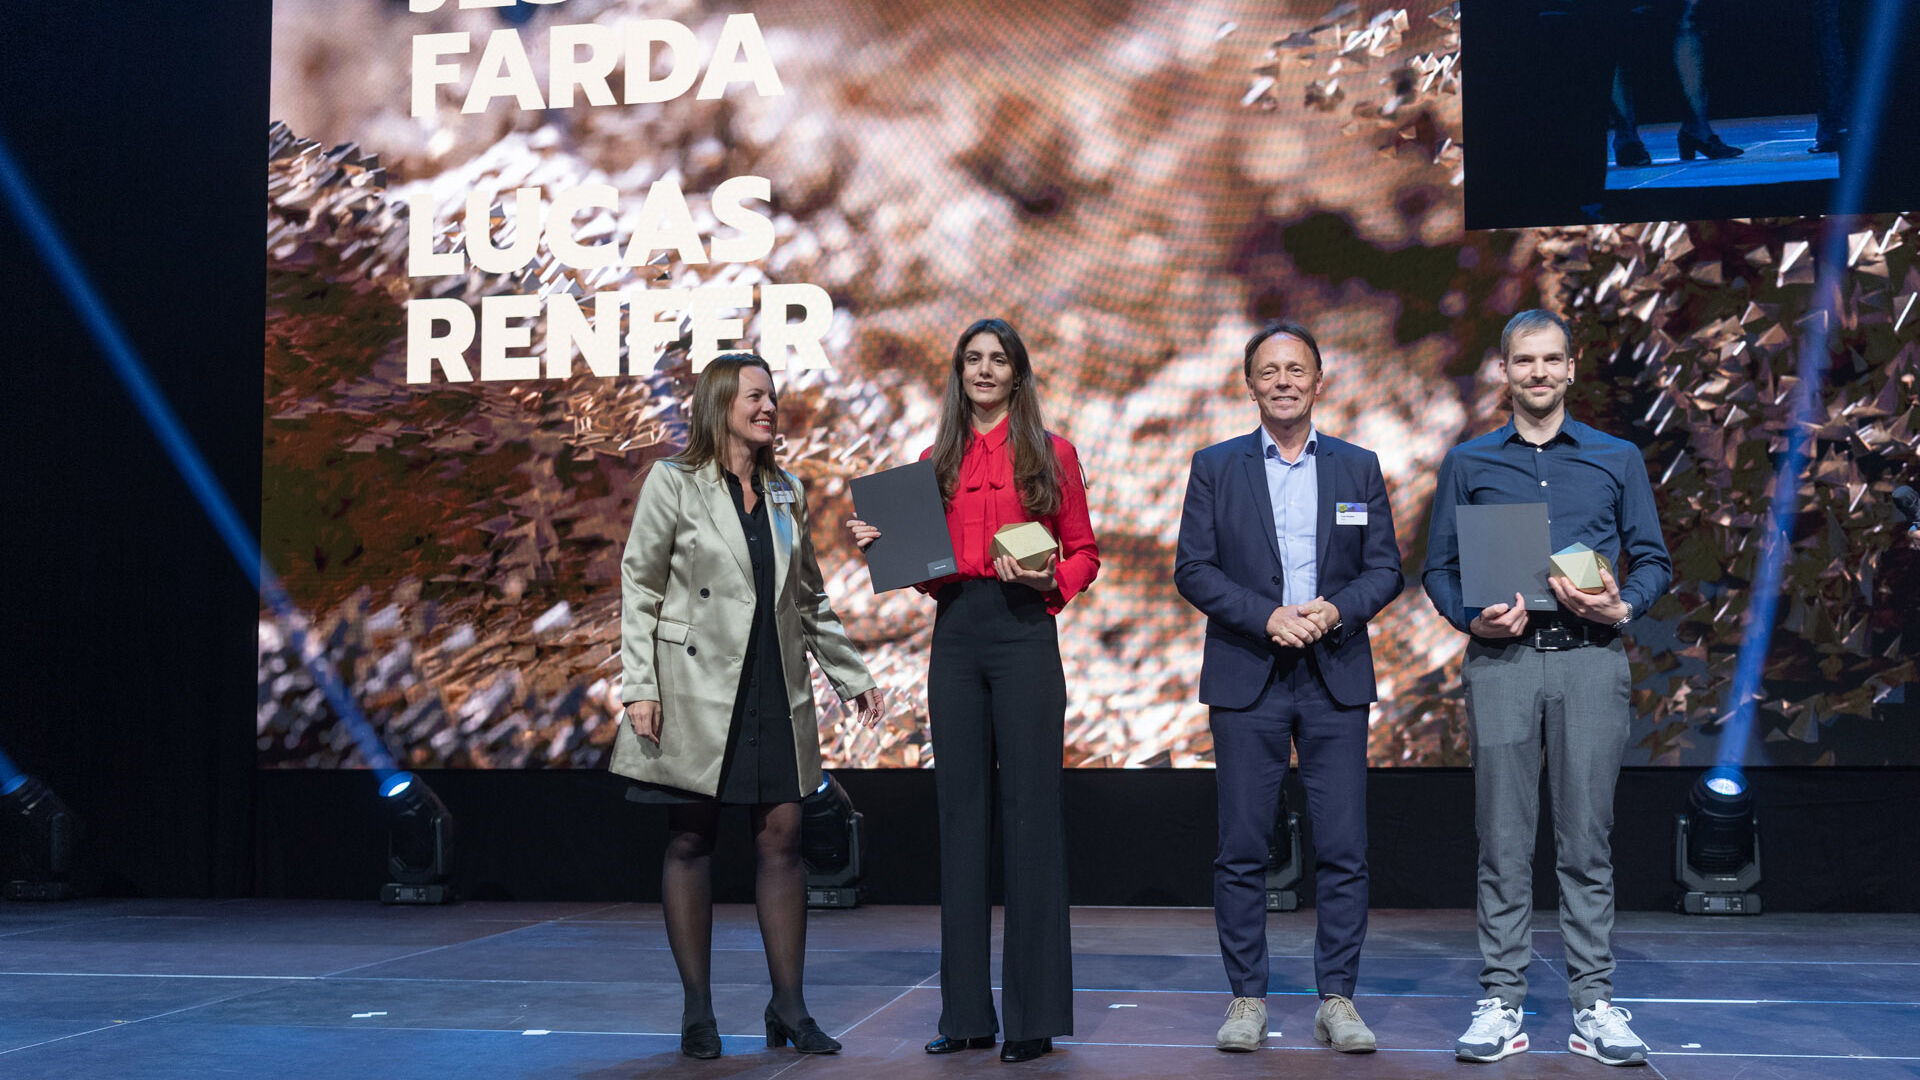 Digital Economy Award: fotogalleriet fra prisuddelingen på Hallenstadion i Zürich i Schweiz den 16. november 2023